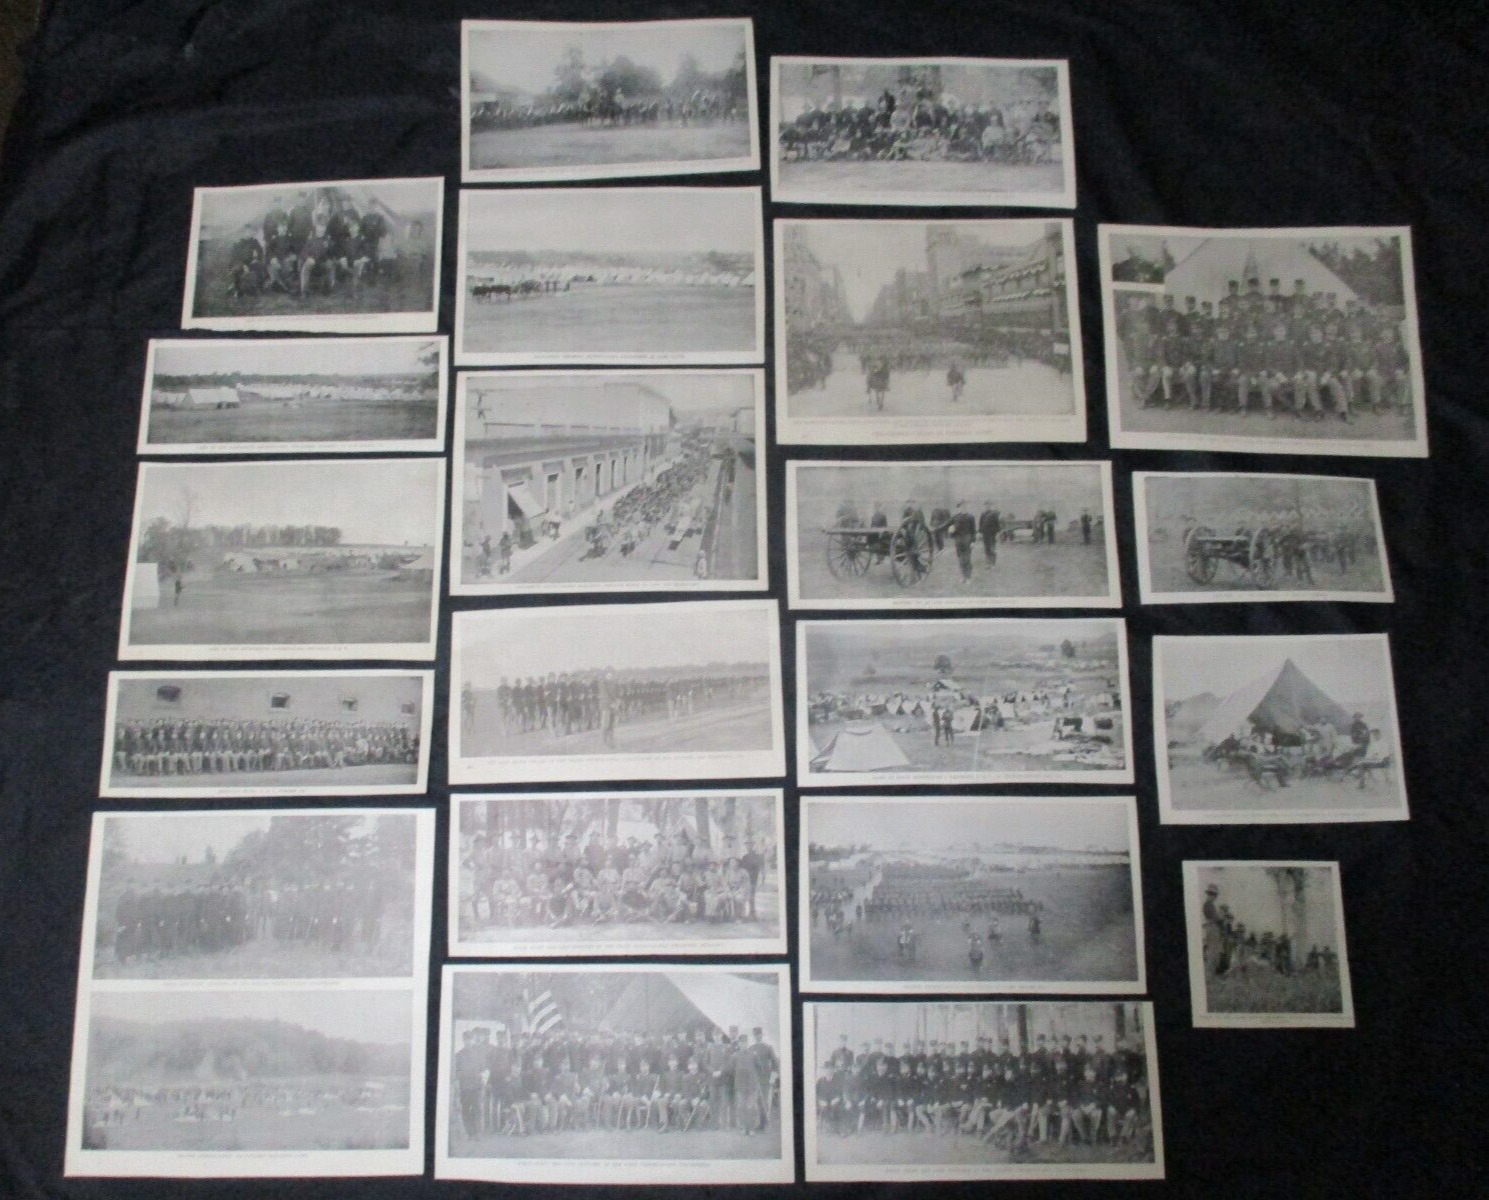 1899 Spanish American War Prints - Pennsylvania Regiments, Infantry, Artillery +